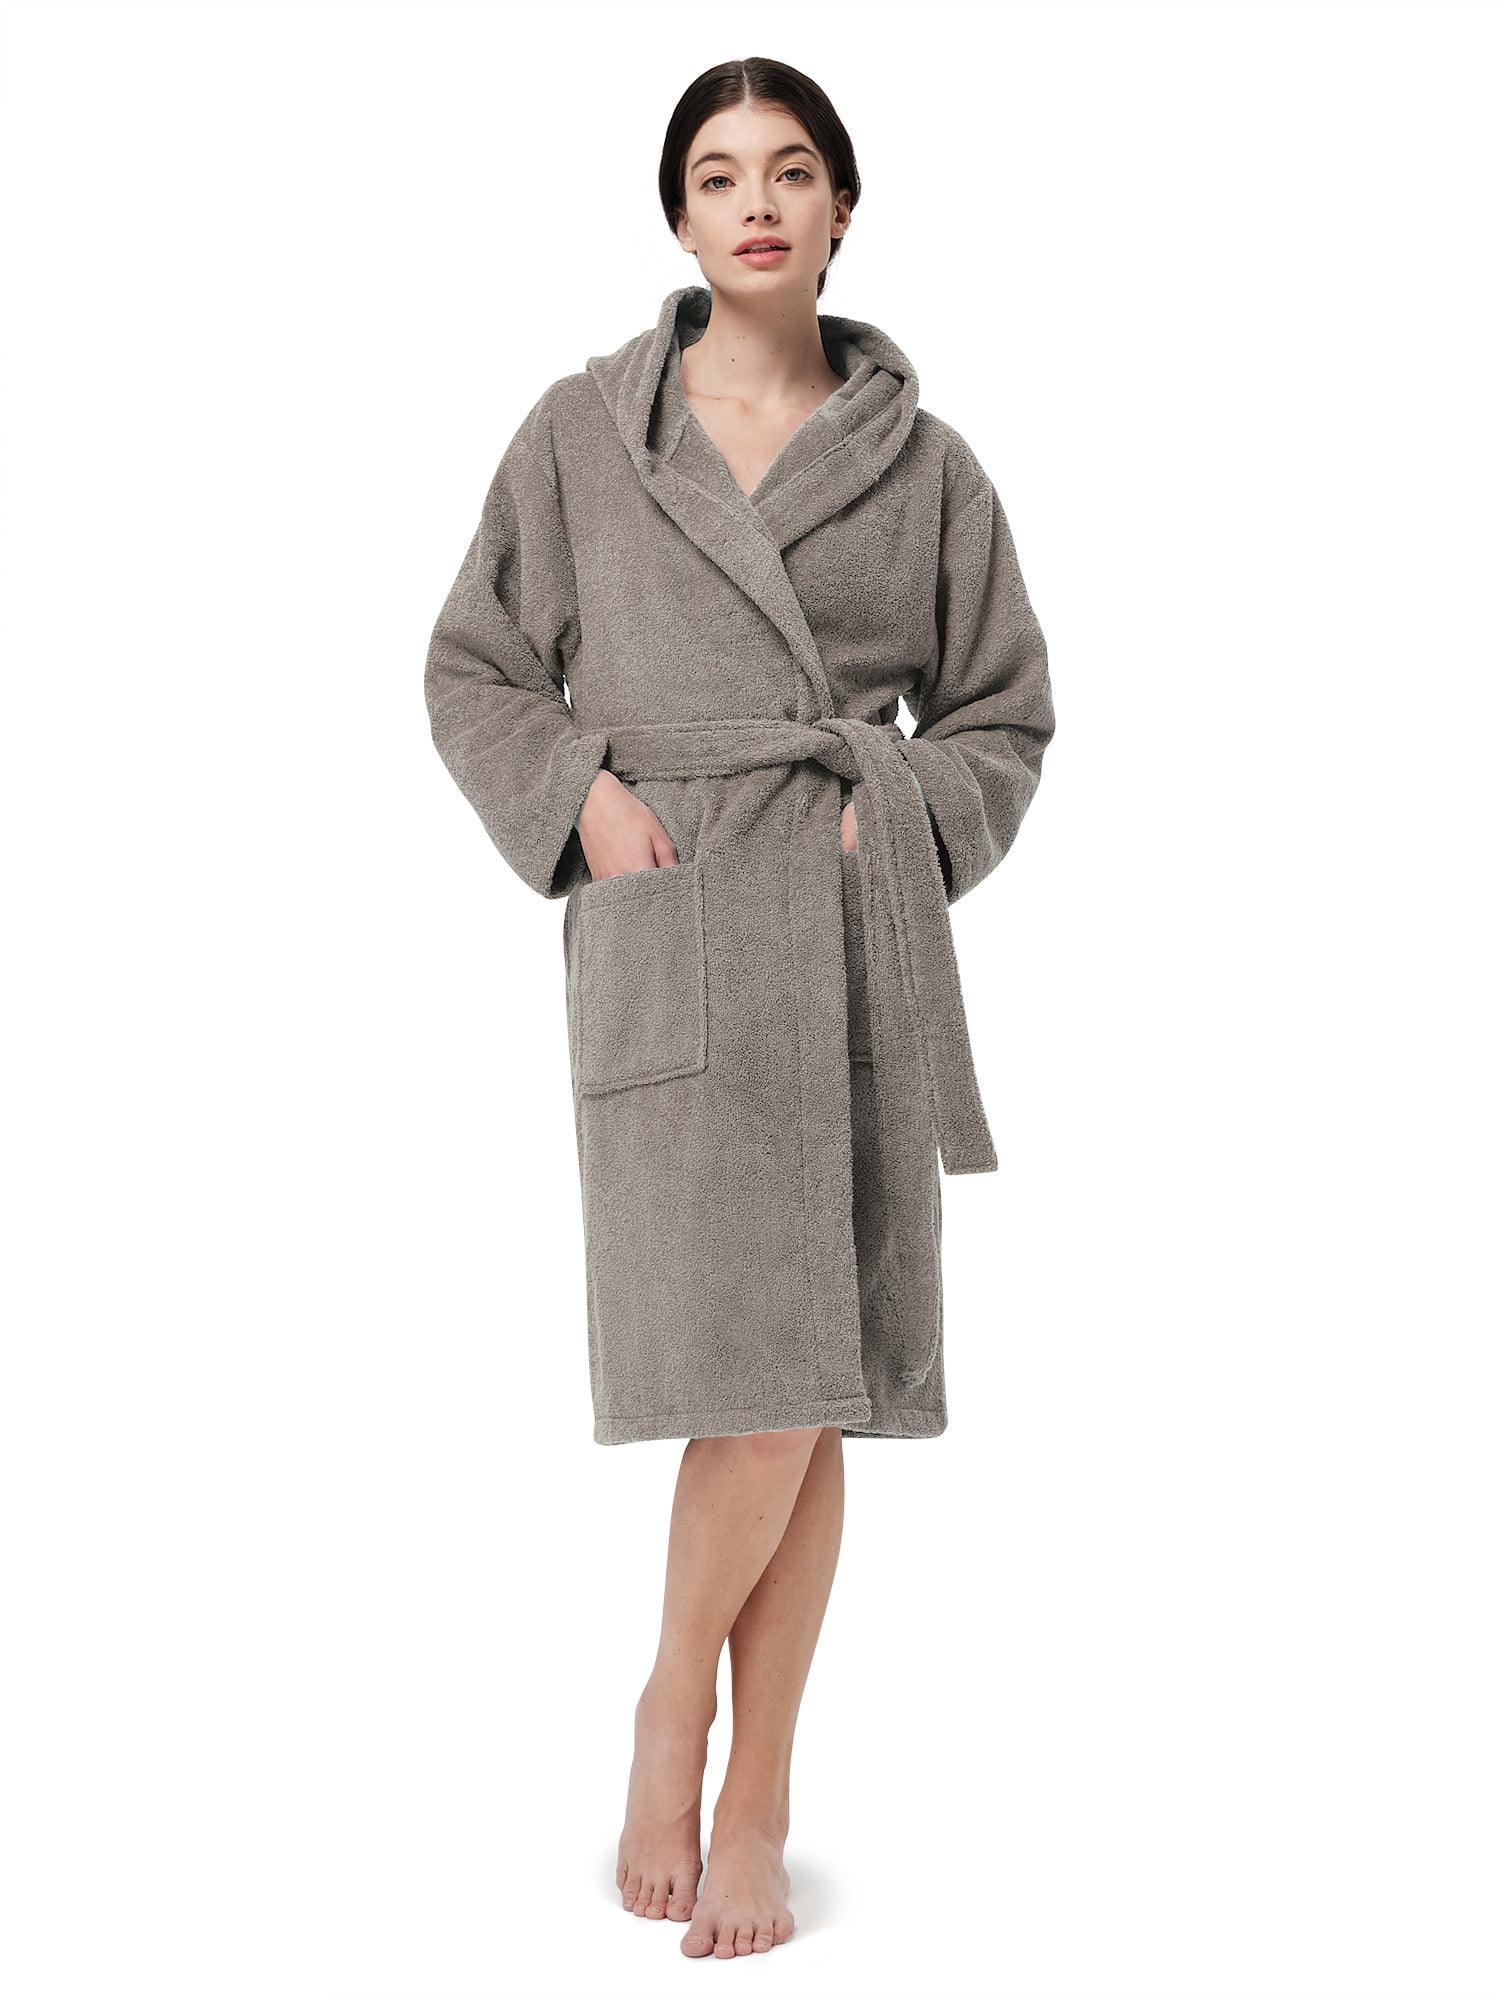 SIORO Womens Robe Terry Cloth Bathrobe Cotton Soft Warm Shawl Collar Housecoat Calf Length Hotel Spa Sleepwear with Pockets